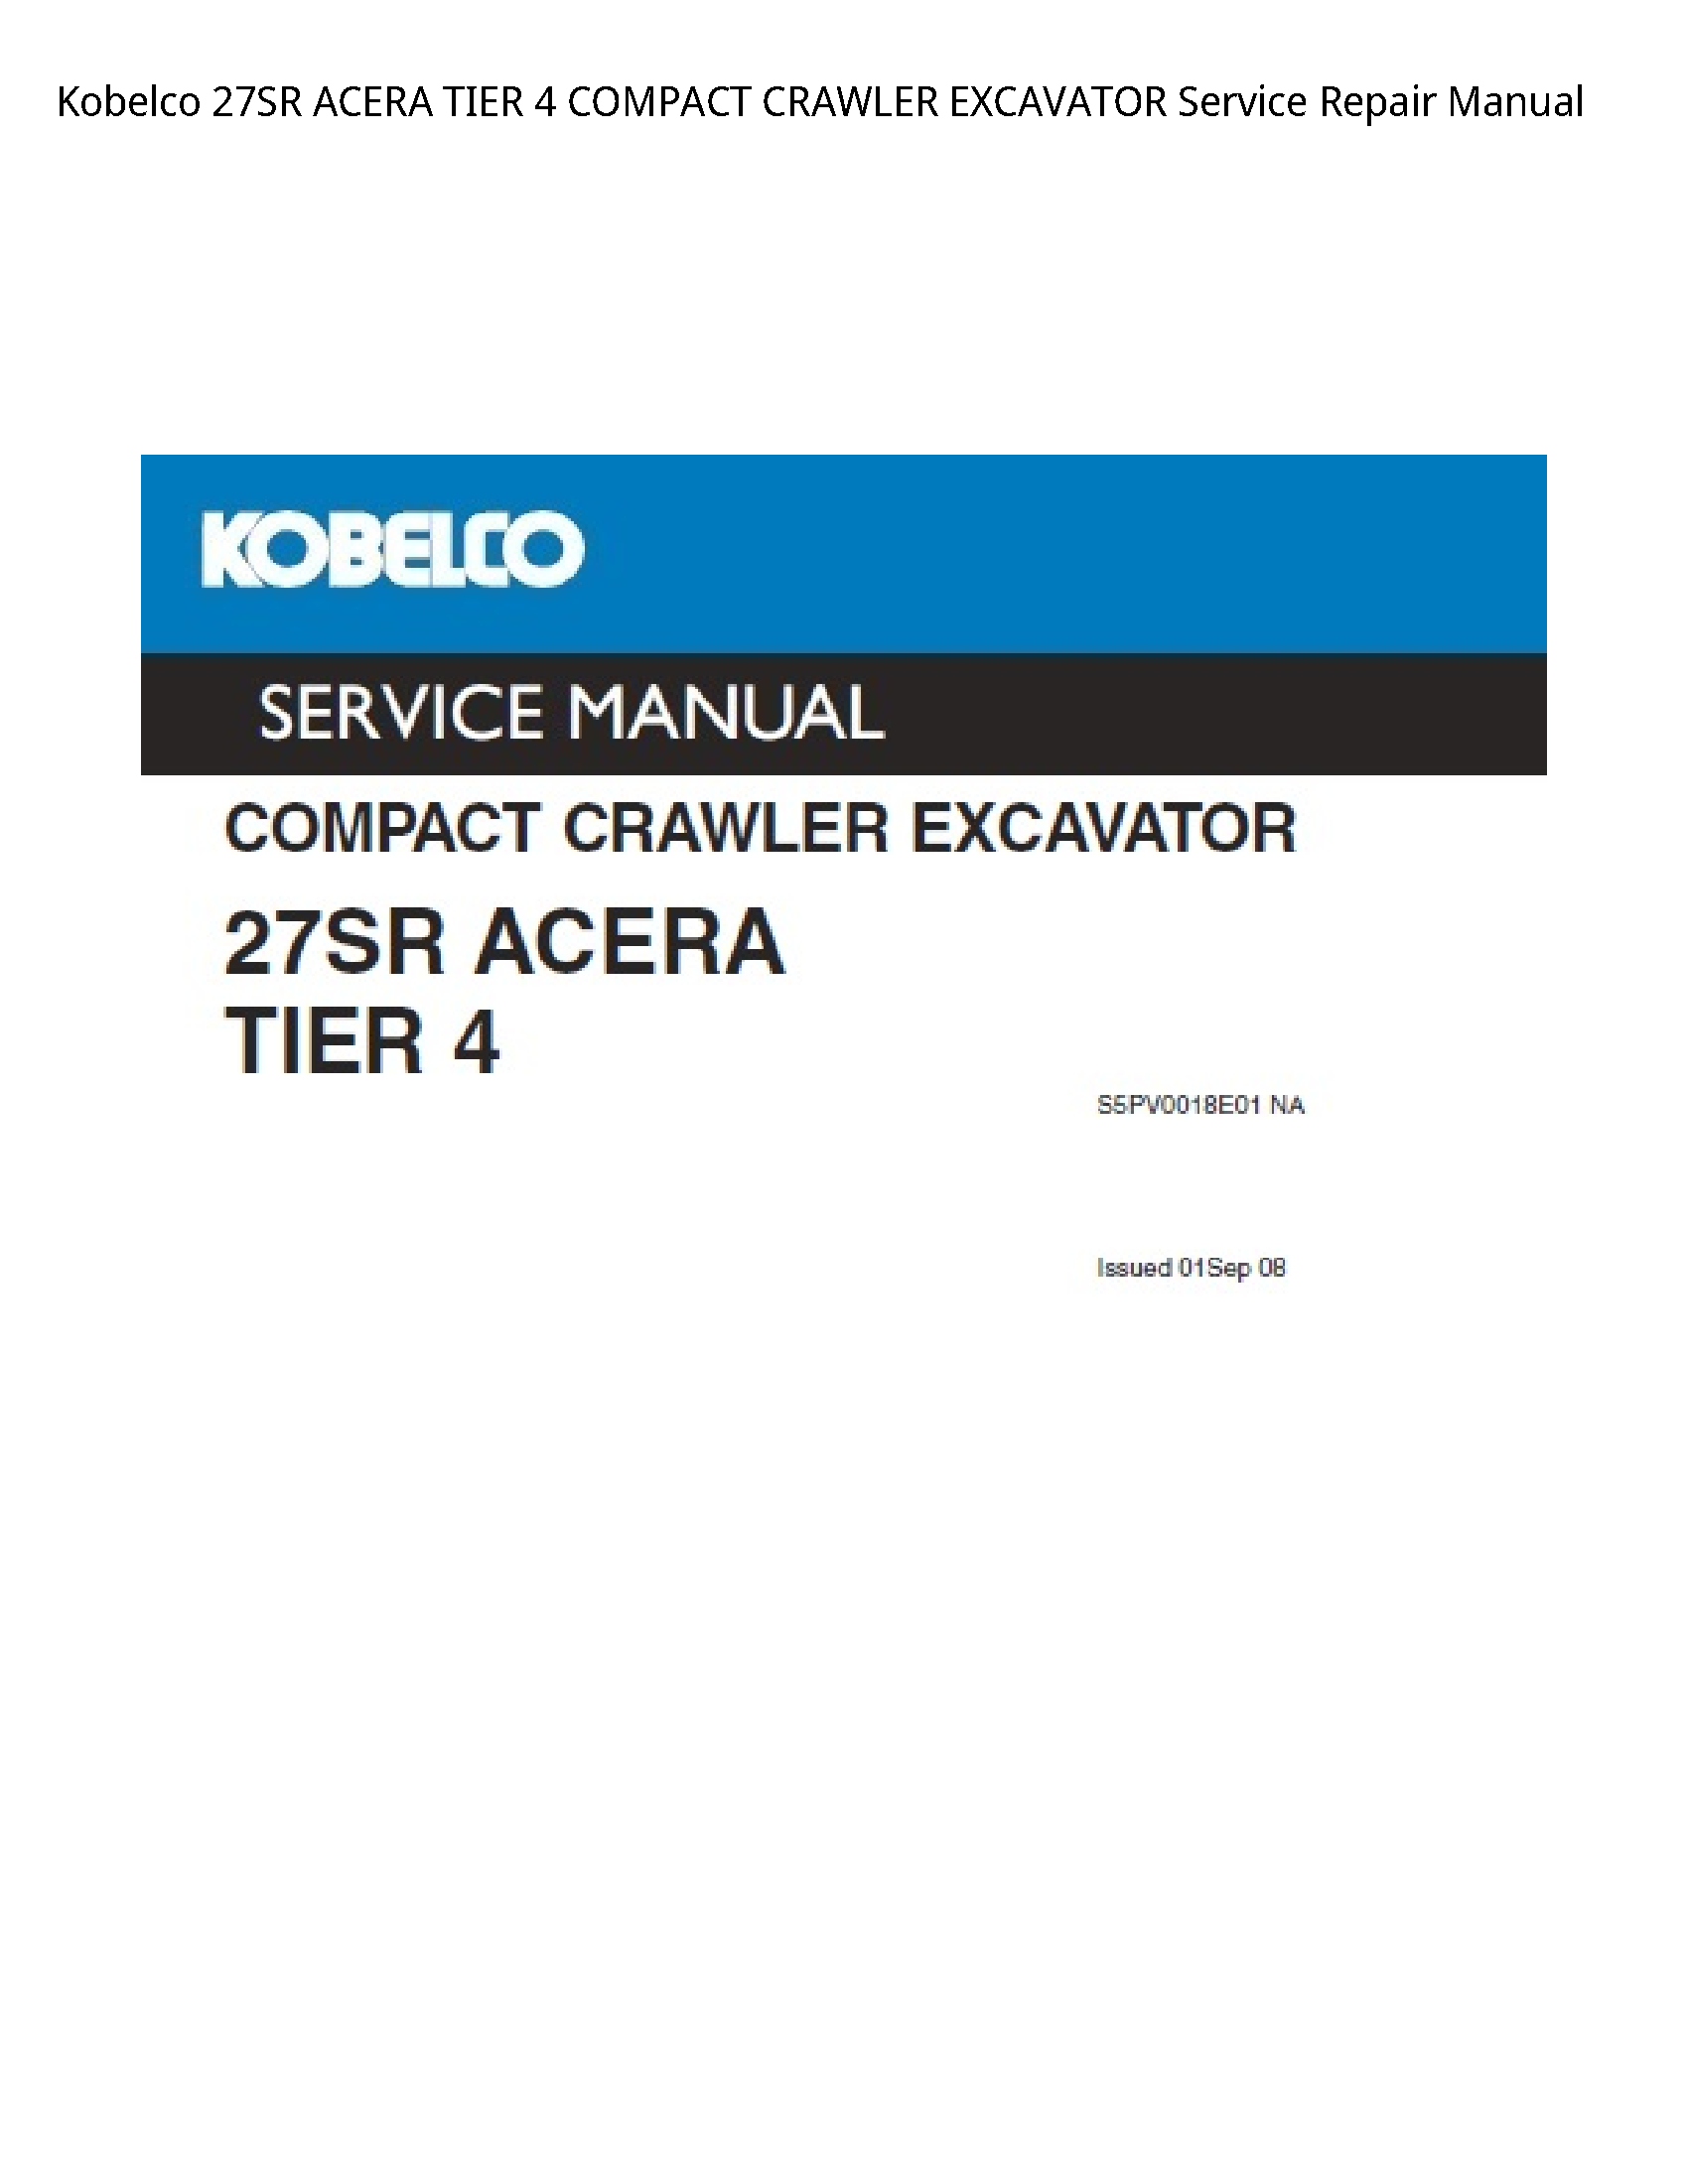 Kobelco 27SR ACERA TIER COMPACT CRAWLER EXCAVATOR manual